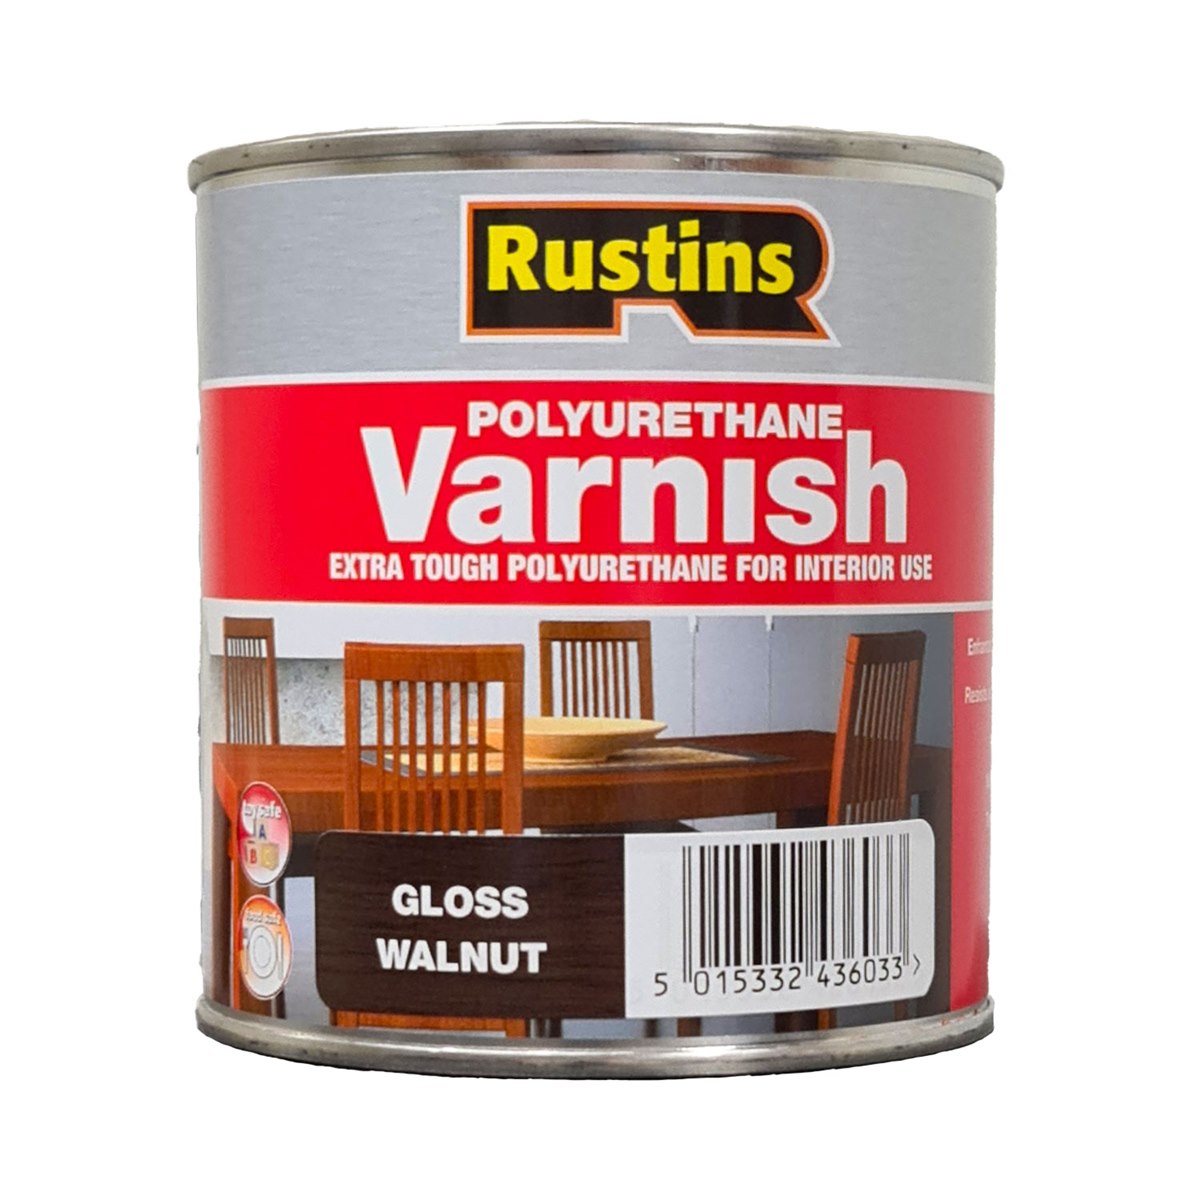 Rustins Polyurethane Varnish Gloss Walnut 250ml